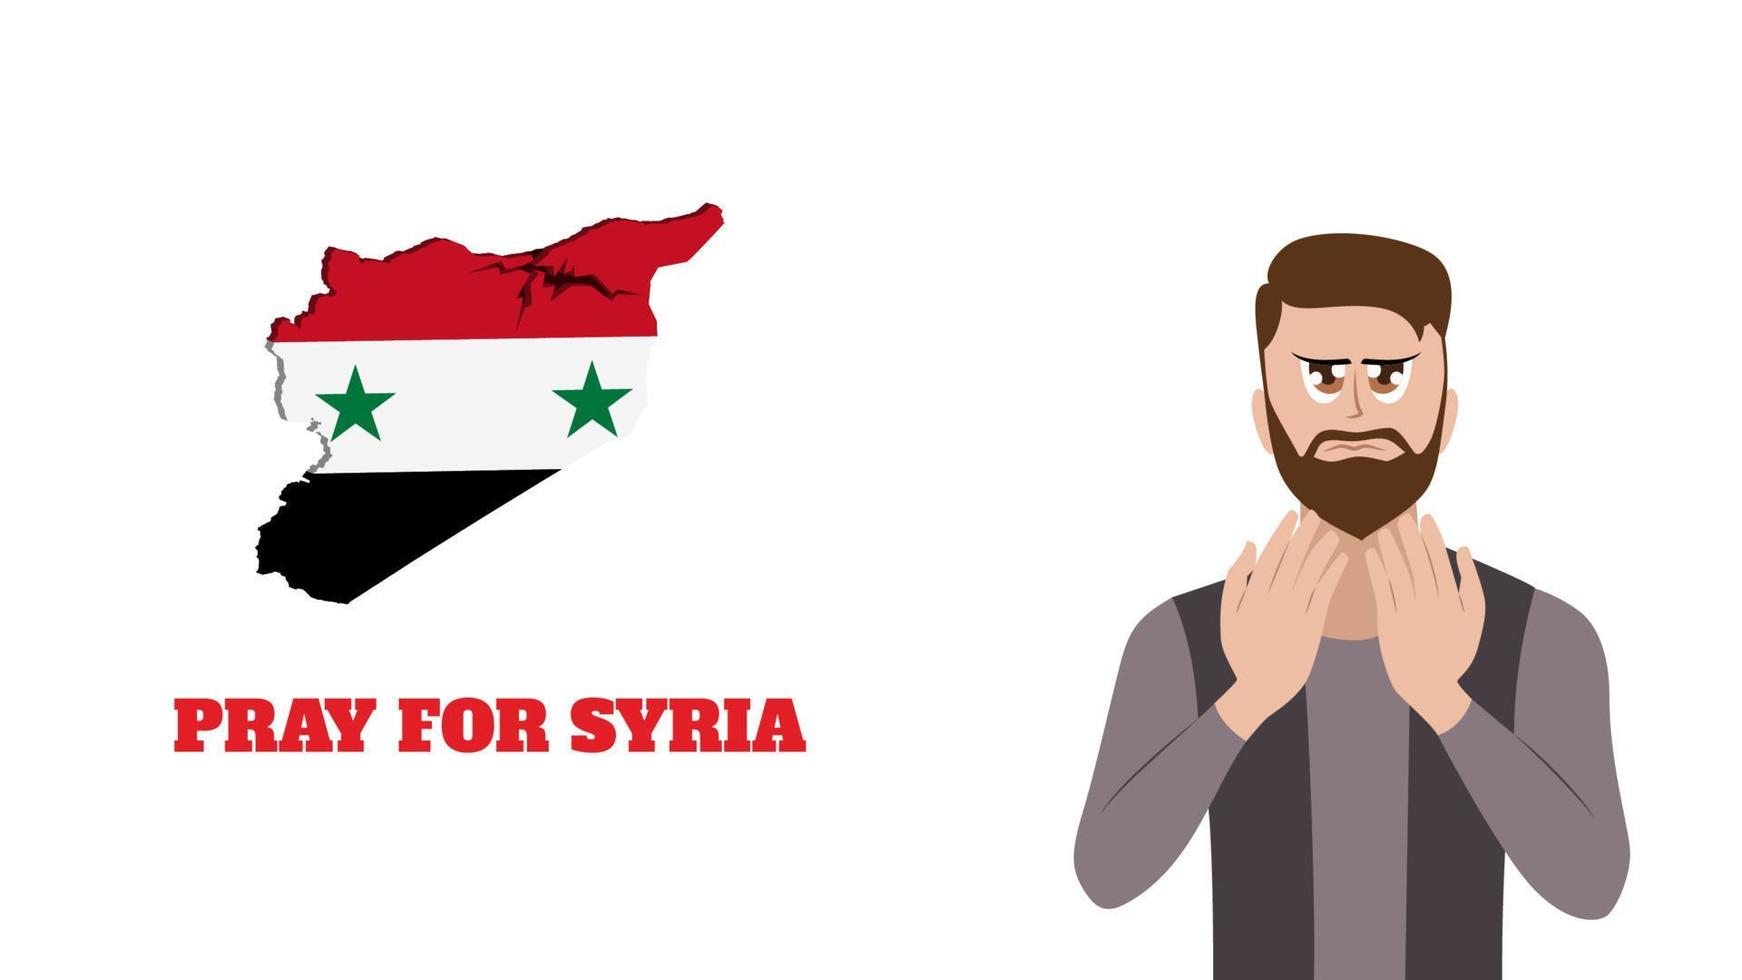 pray for Syria, a man praying vector illustration.